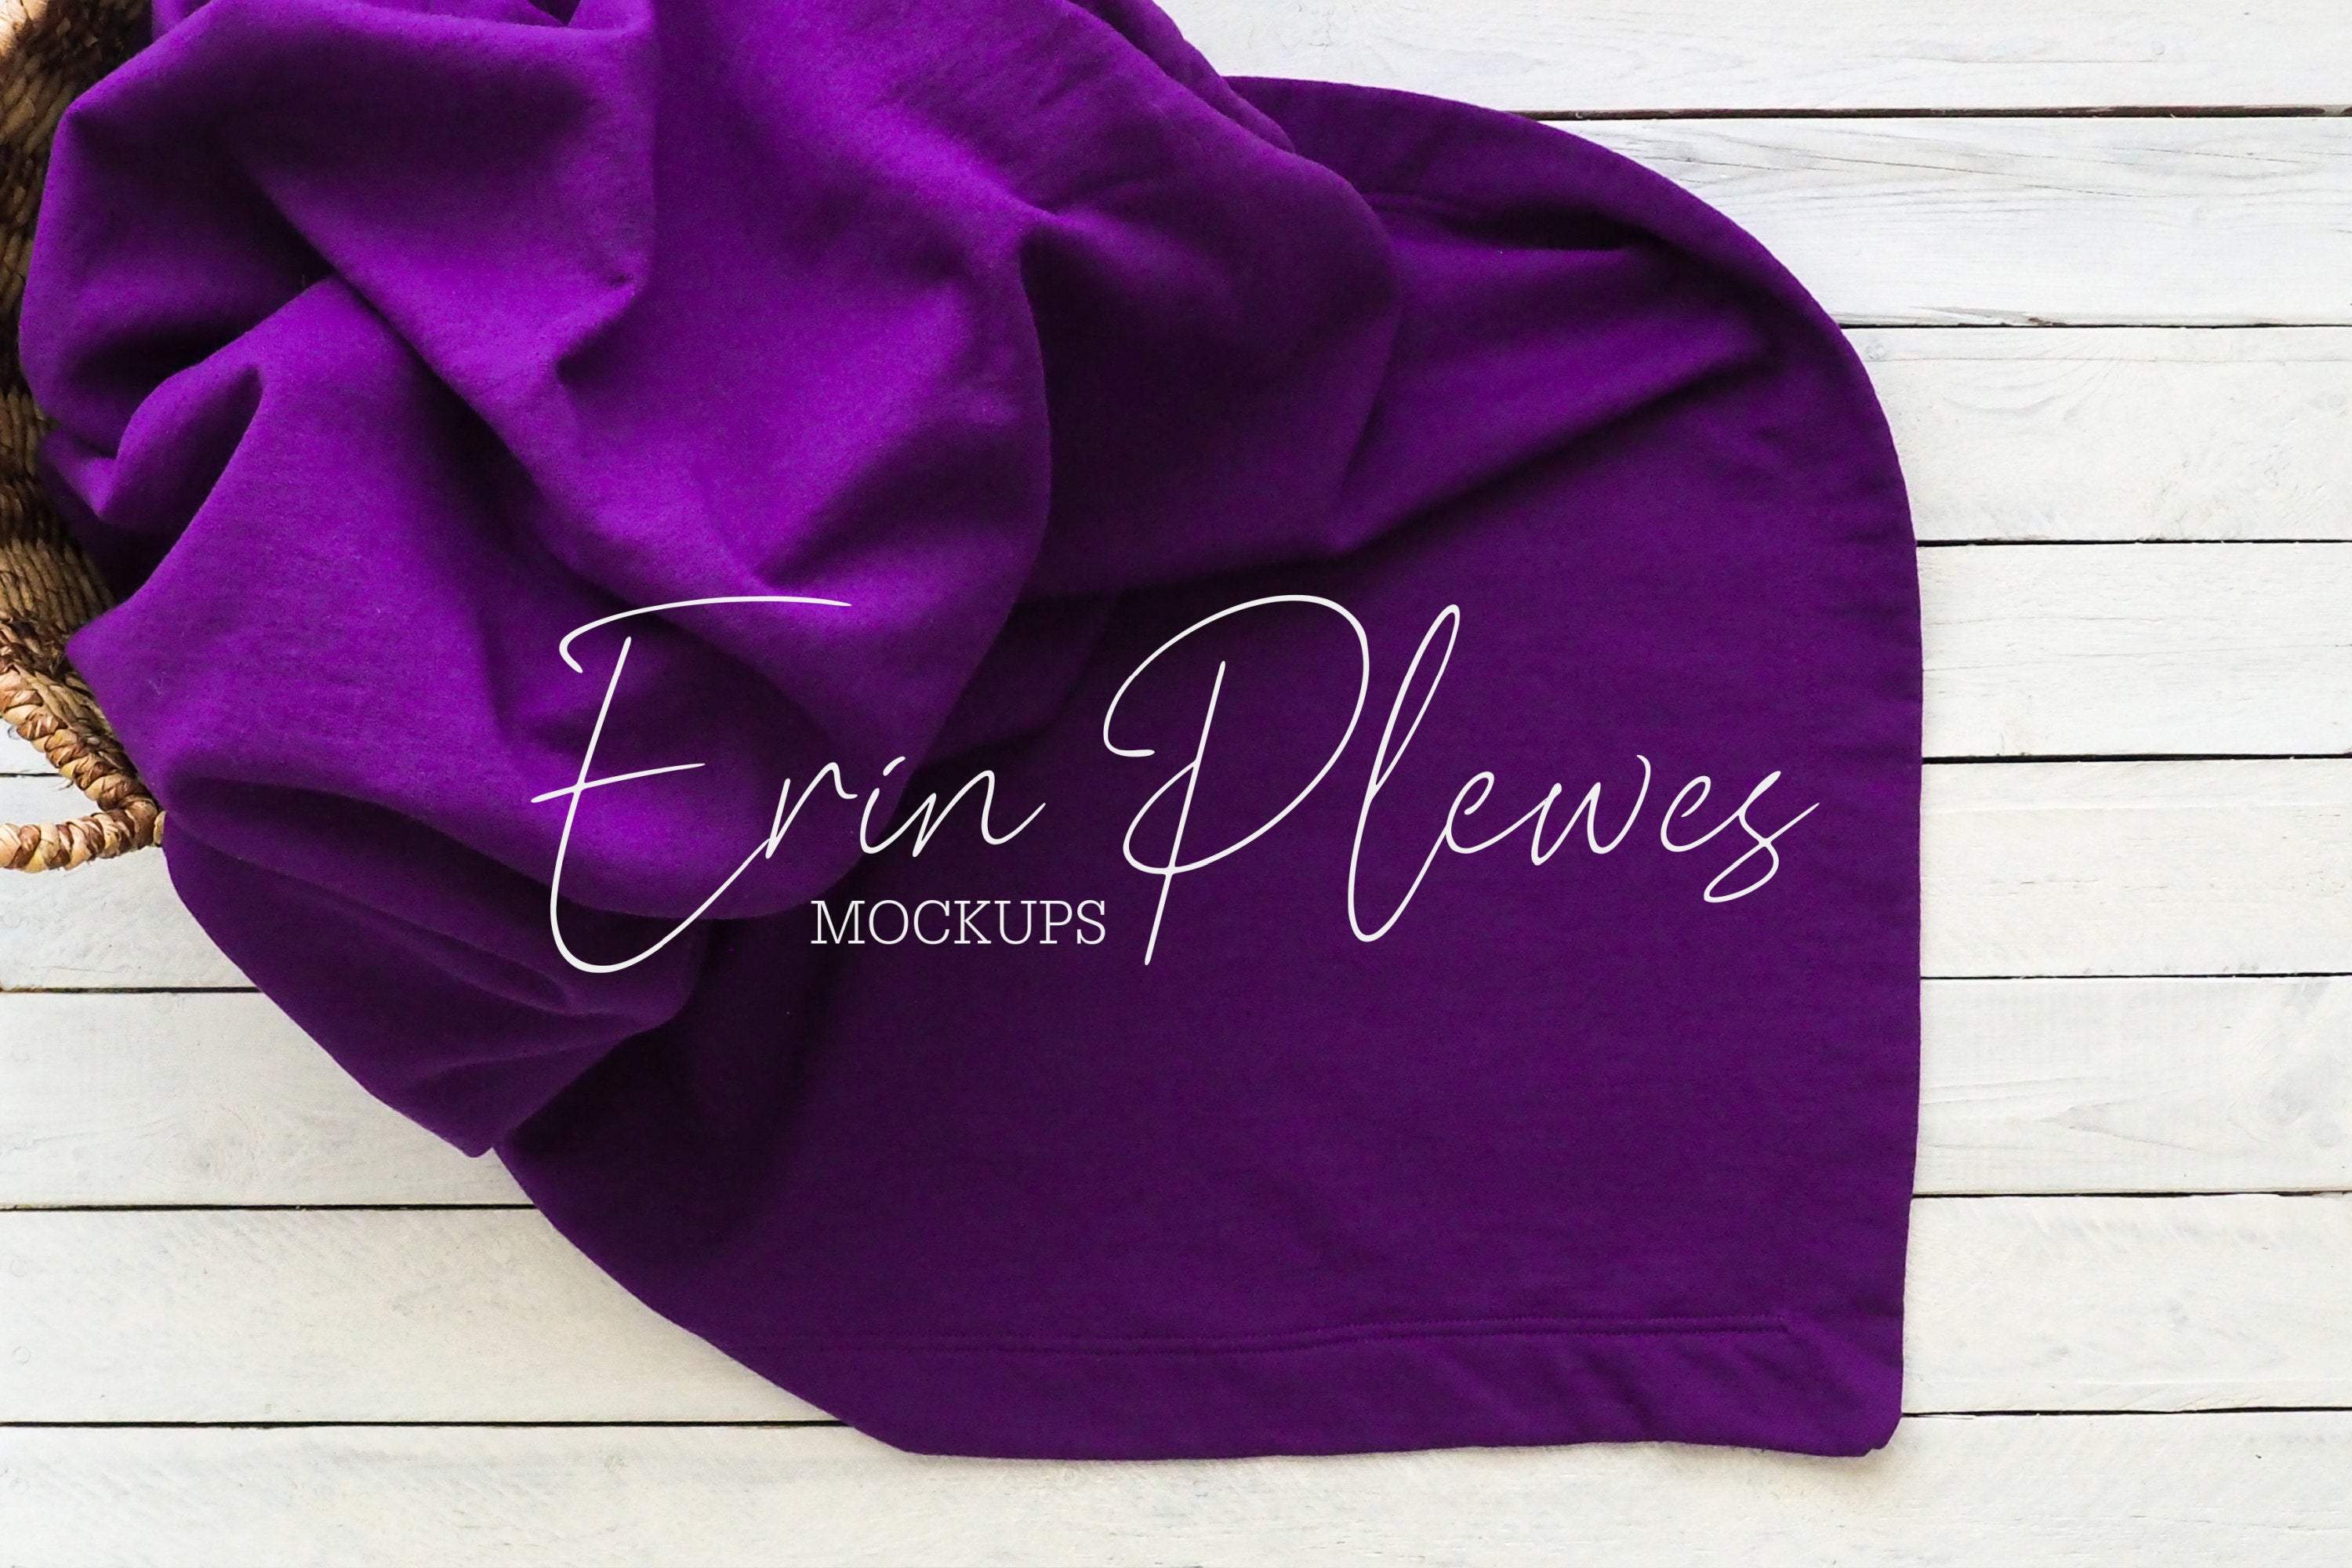 Download Stadium Blanket Mockup, Purple Blanket Mock Up Lifestyle Stock Photo,